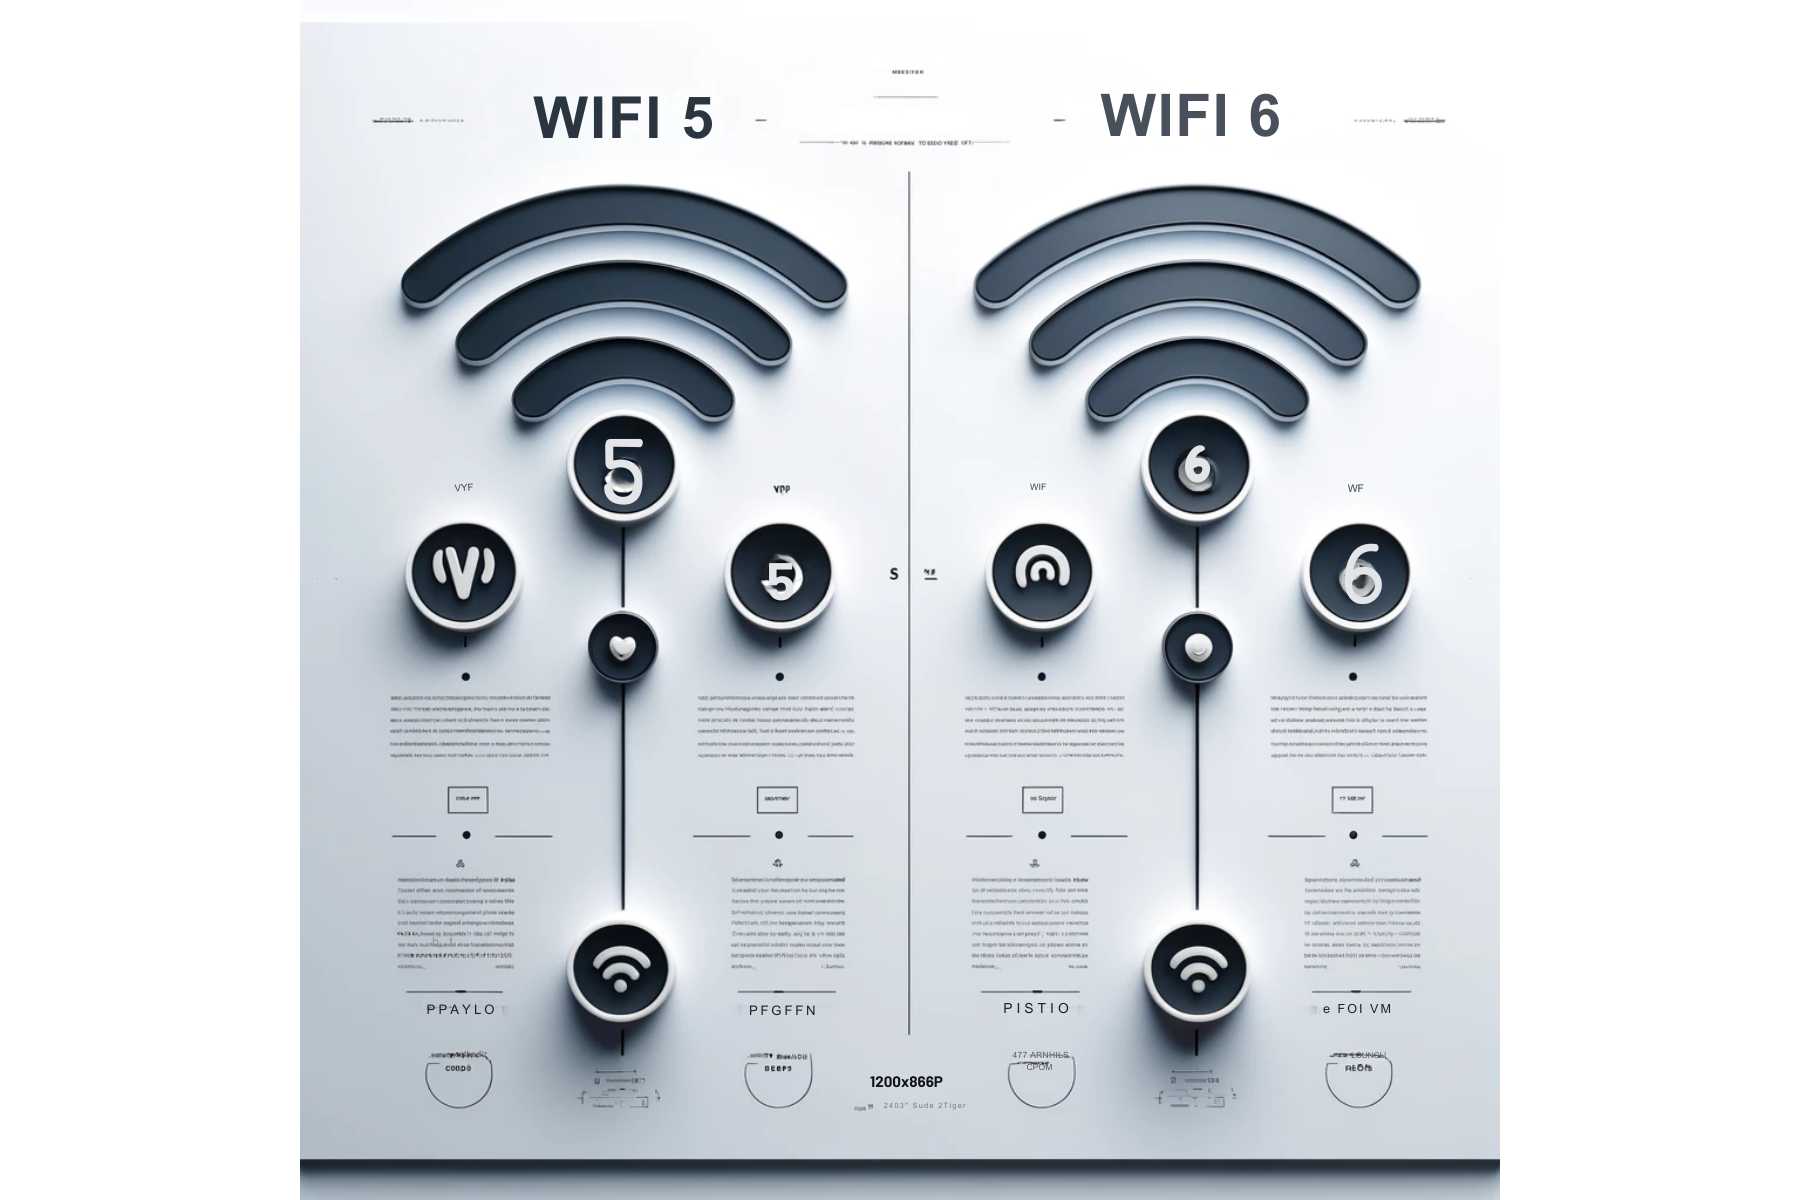 WiFi 5 vs WiFi 6 Differences